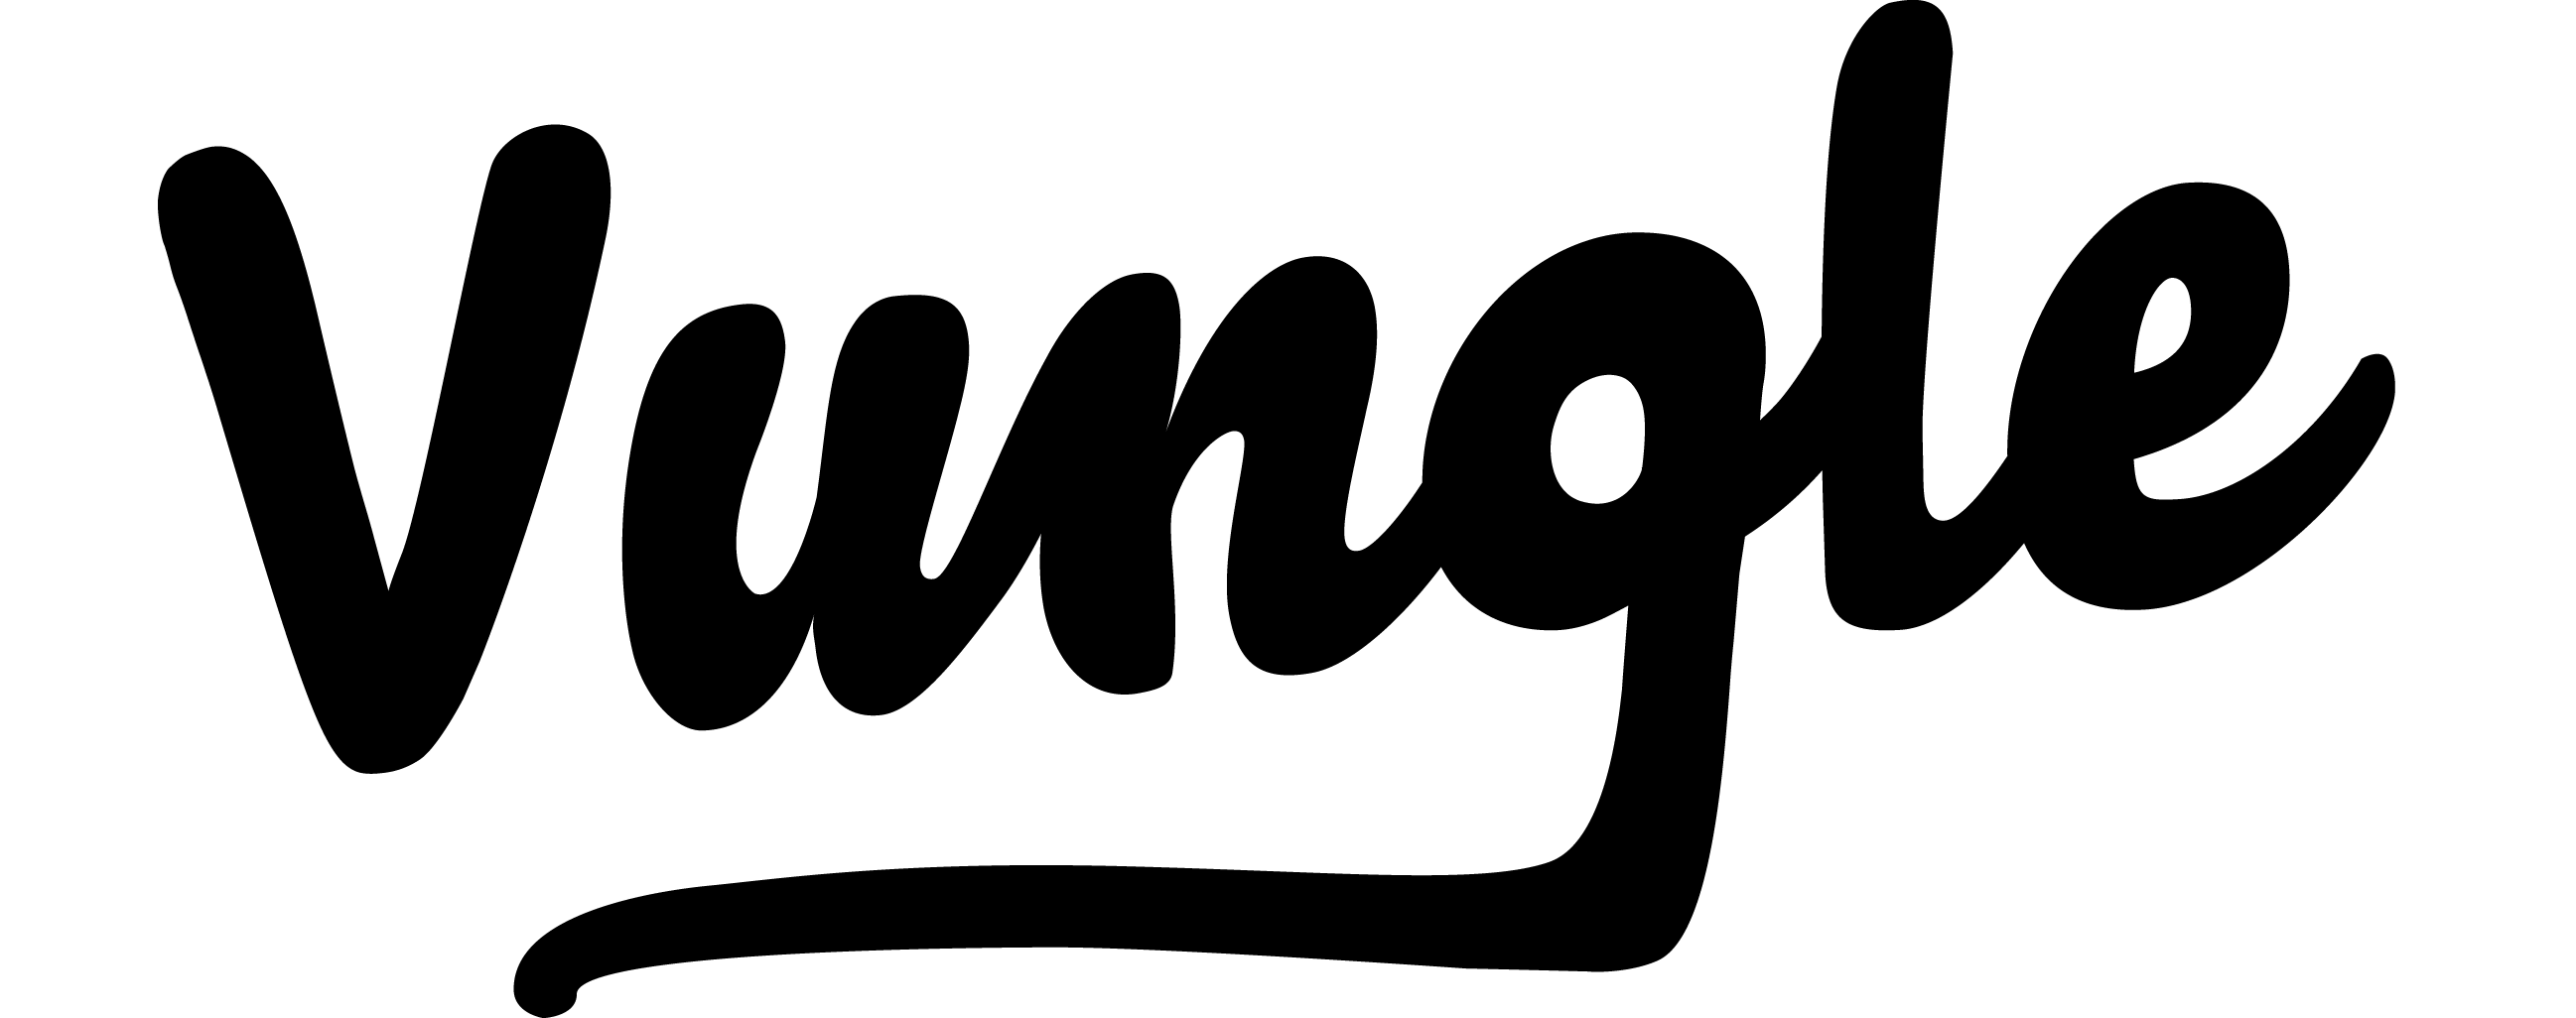 Vungle Logo Black